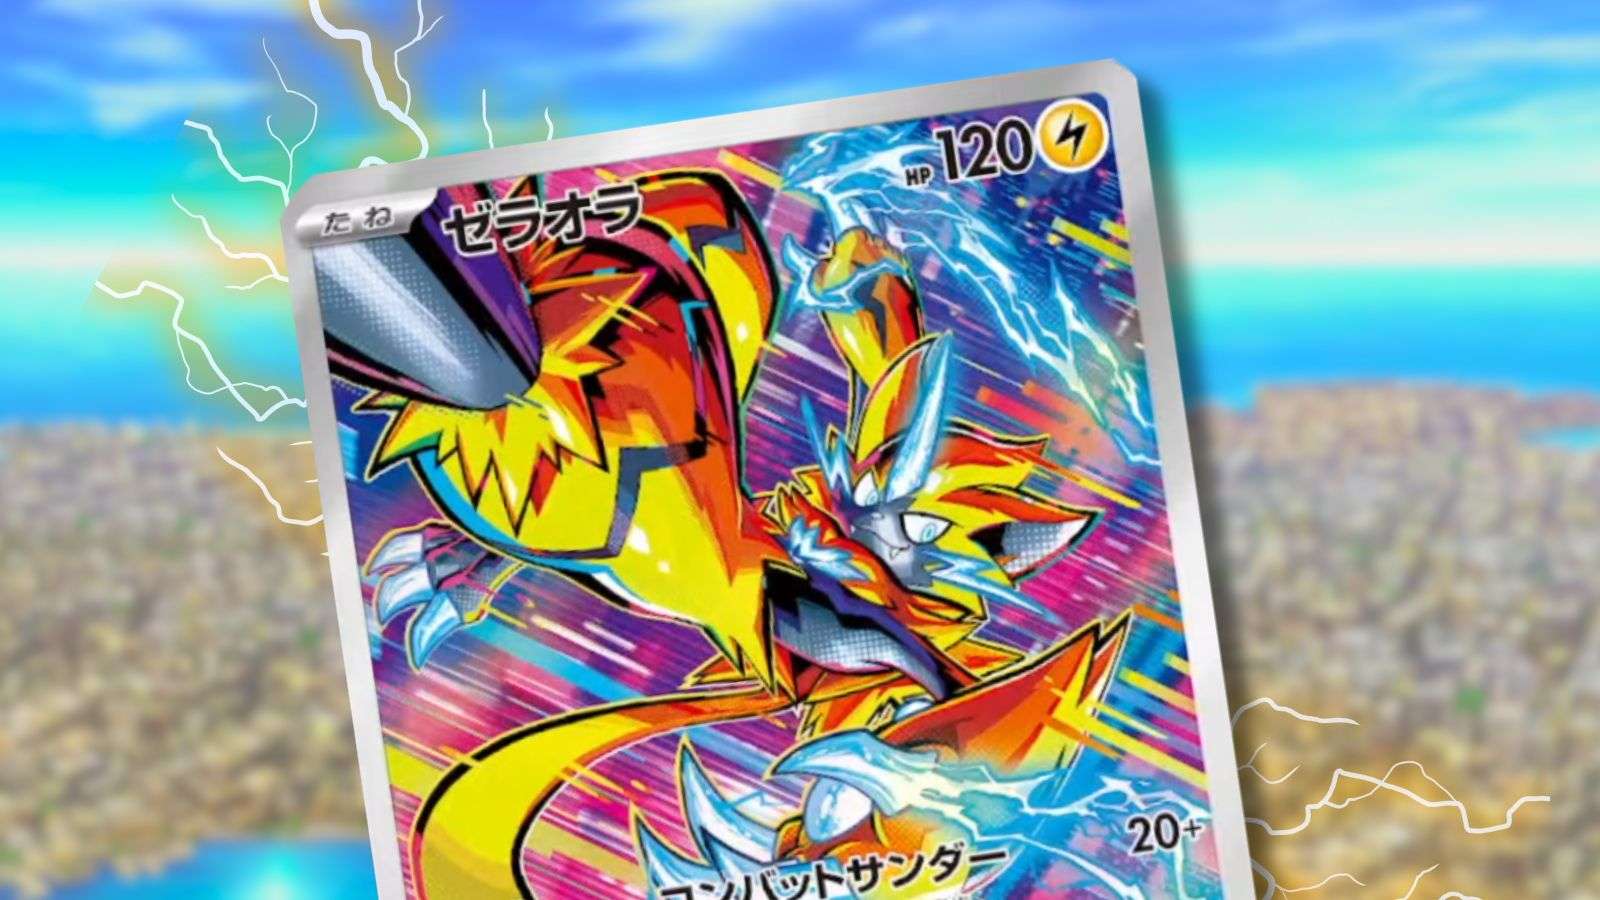 Zeraora Pokemon card with lightning bolts and anime city background.